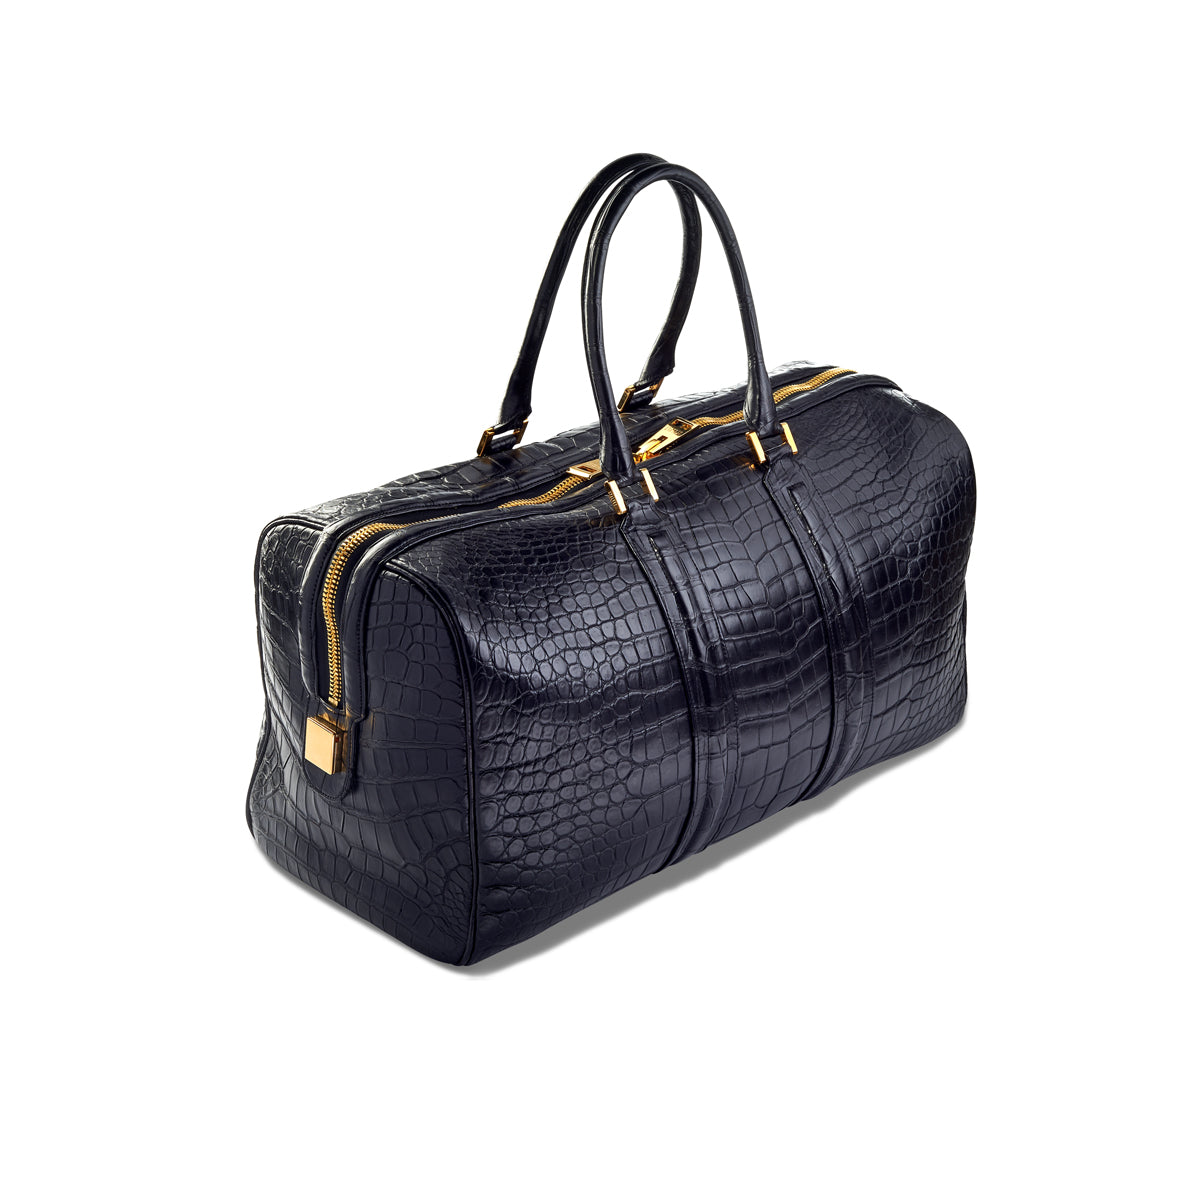 Python Travel Bag Black Travel Bag Duffel Bag Duffle Bag 